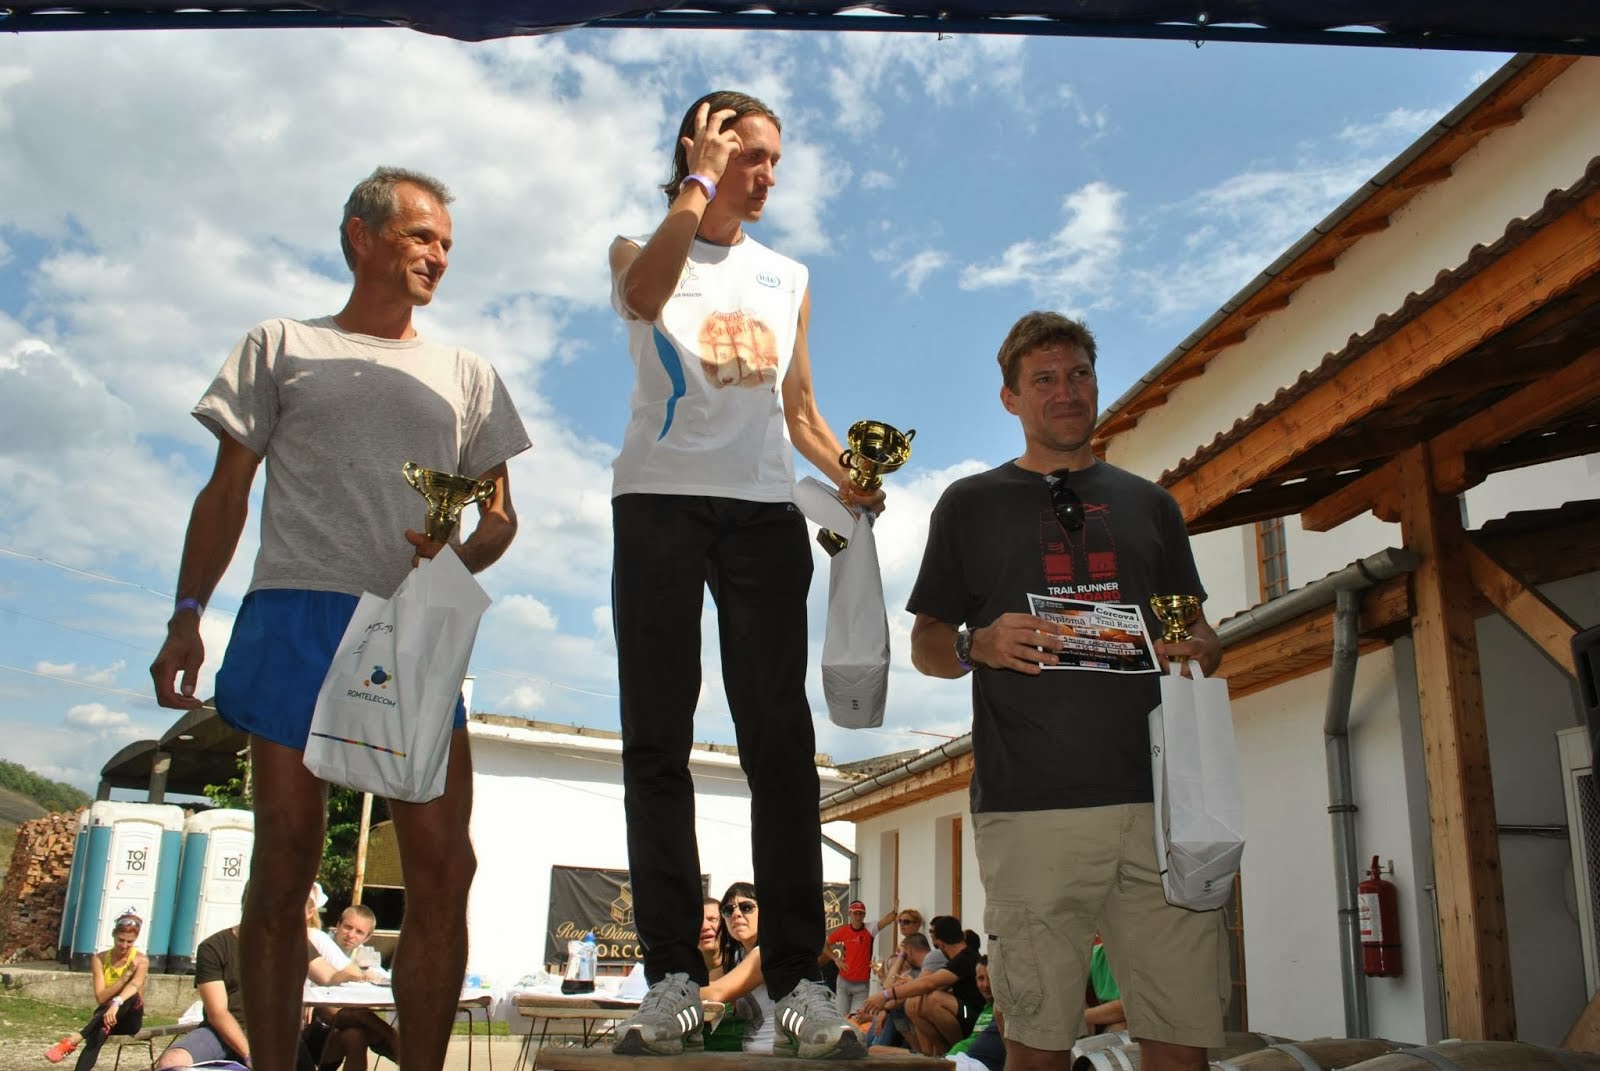 Corcova Trail Race, august 2013, 35 - 50 podium